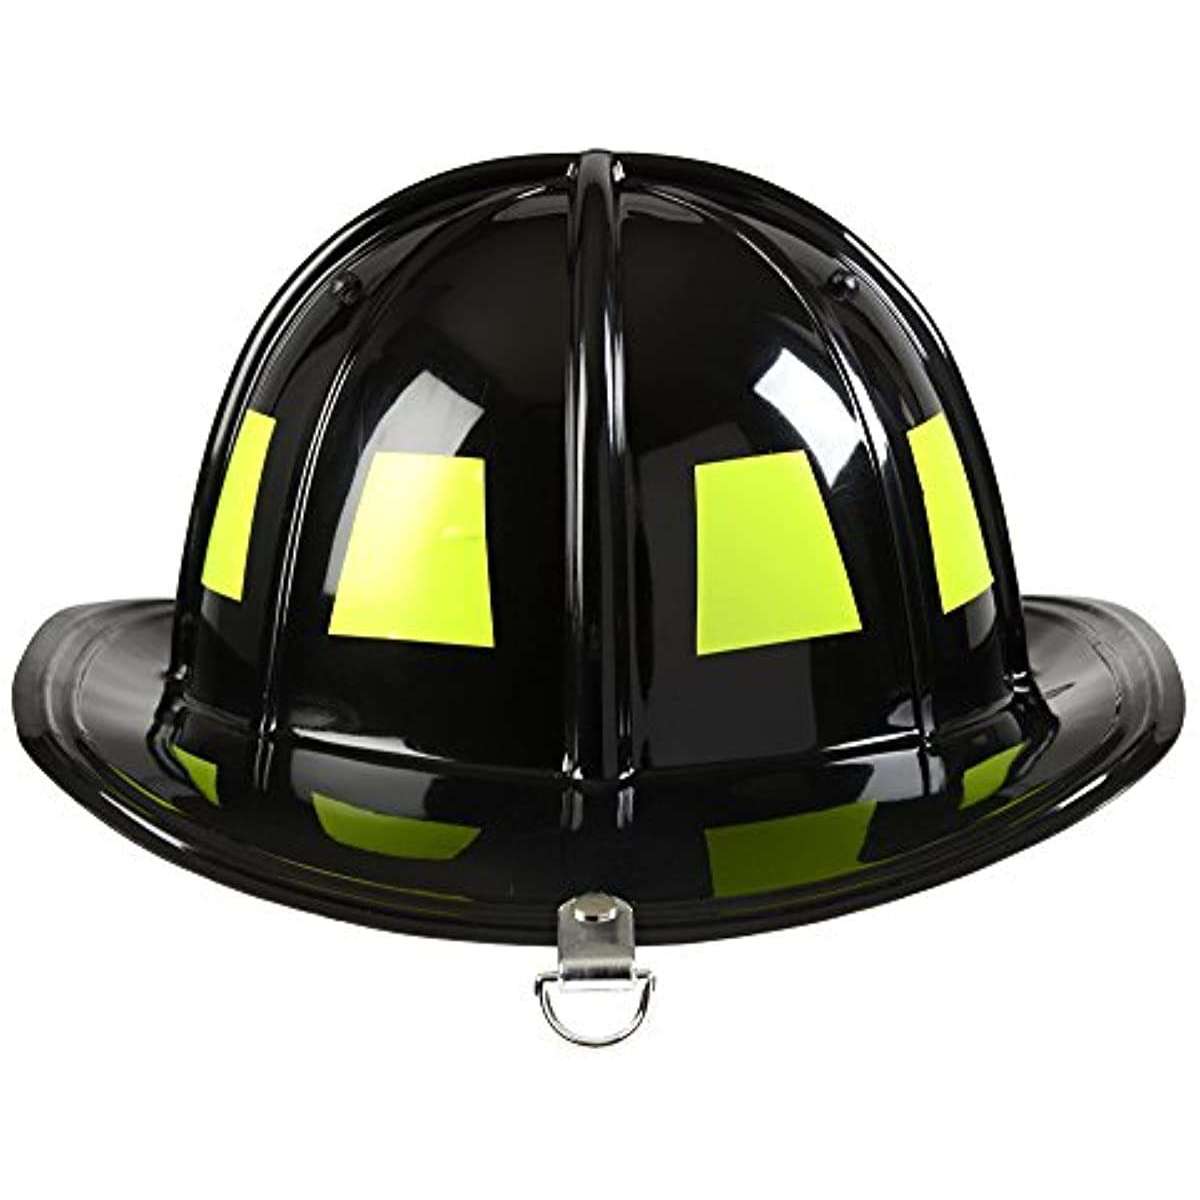 Black Jr. Firefighter Fire Chief Helmet